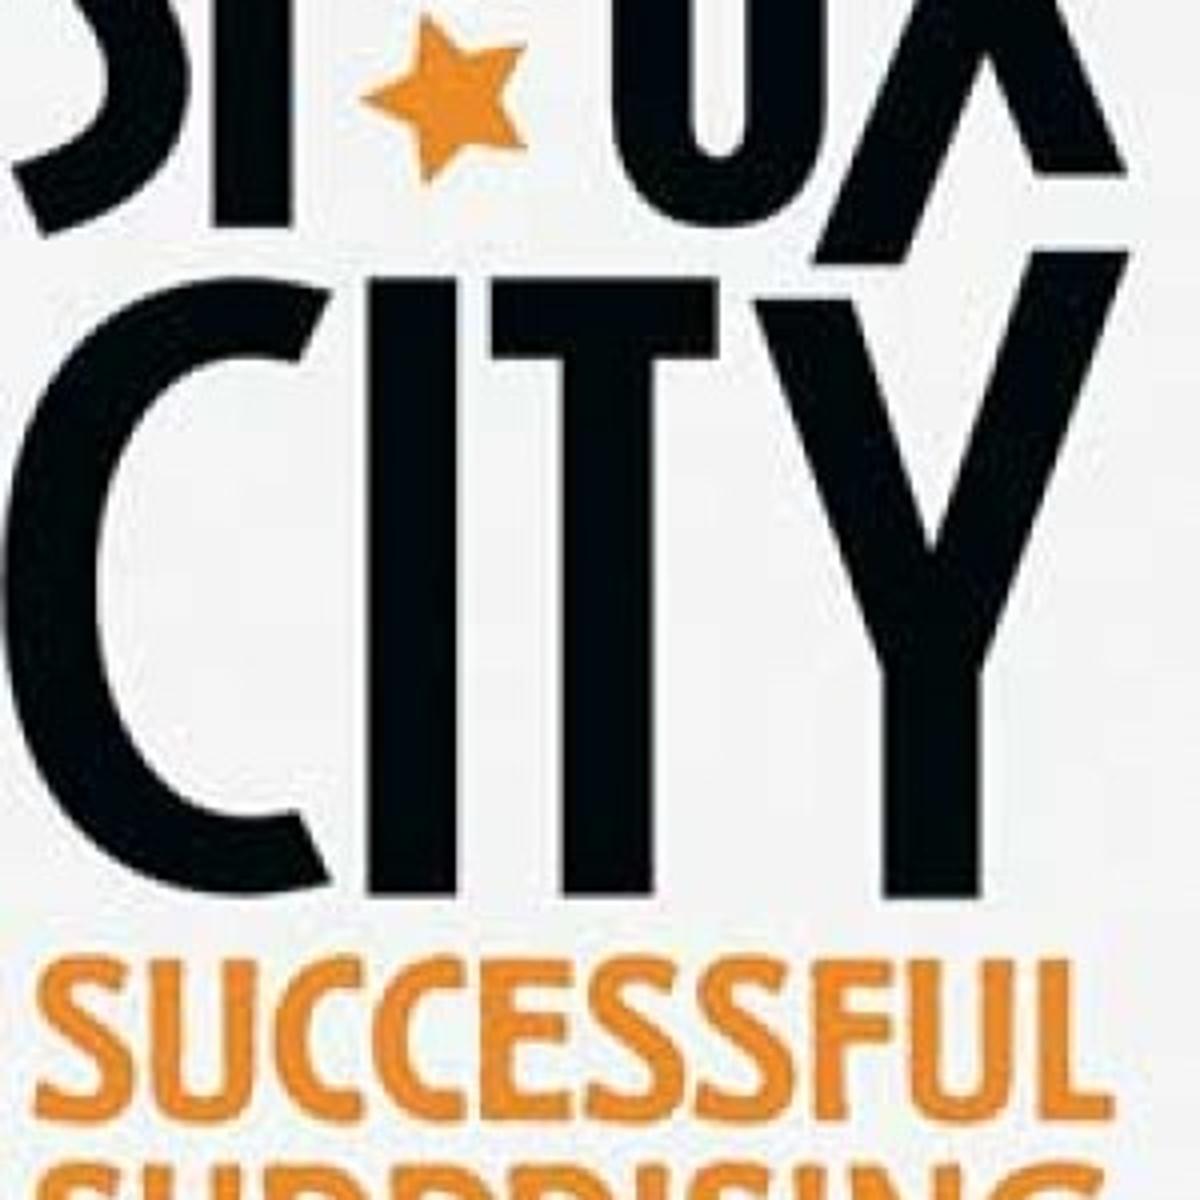 Sioux Logo - It's a Supercalifragilisticexpialidocious Sioux City logo. Opinion